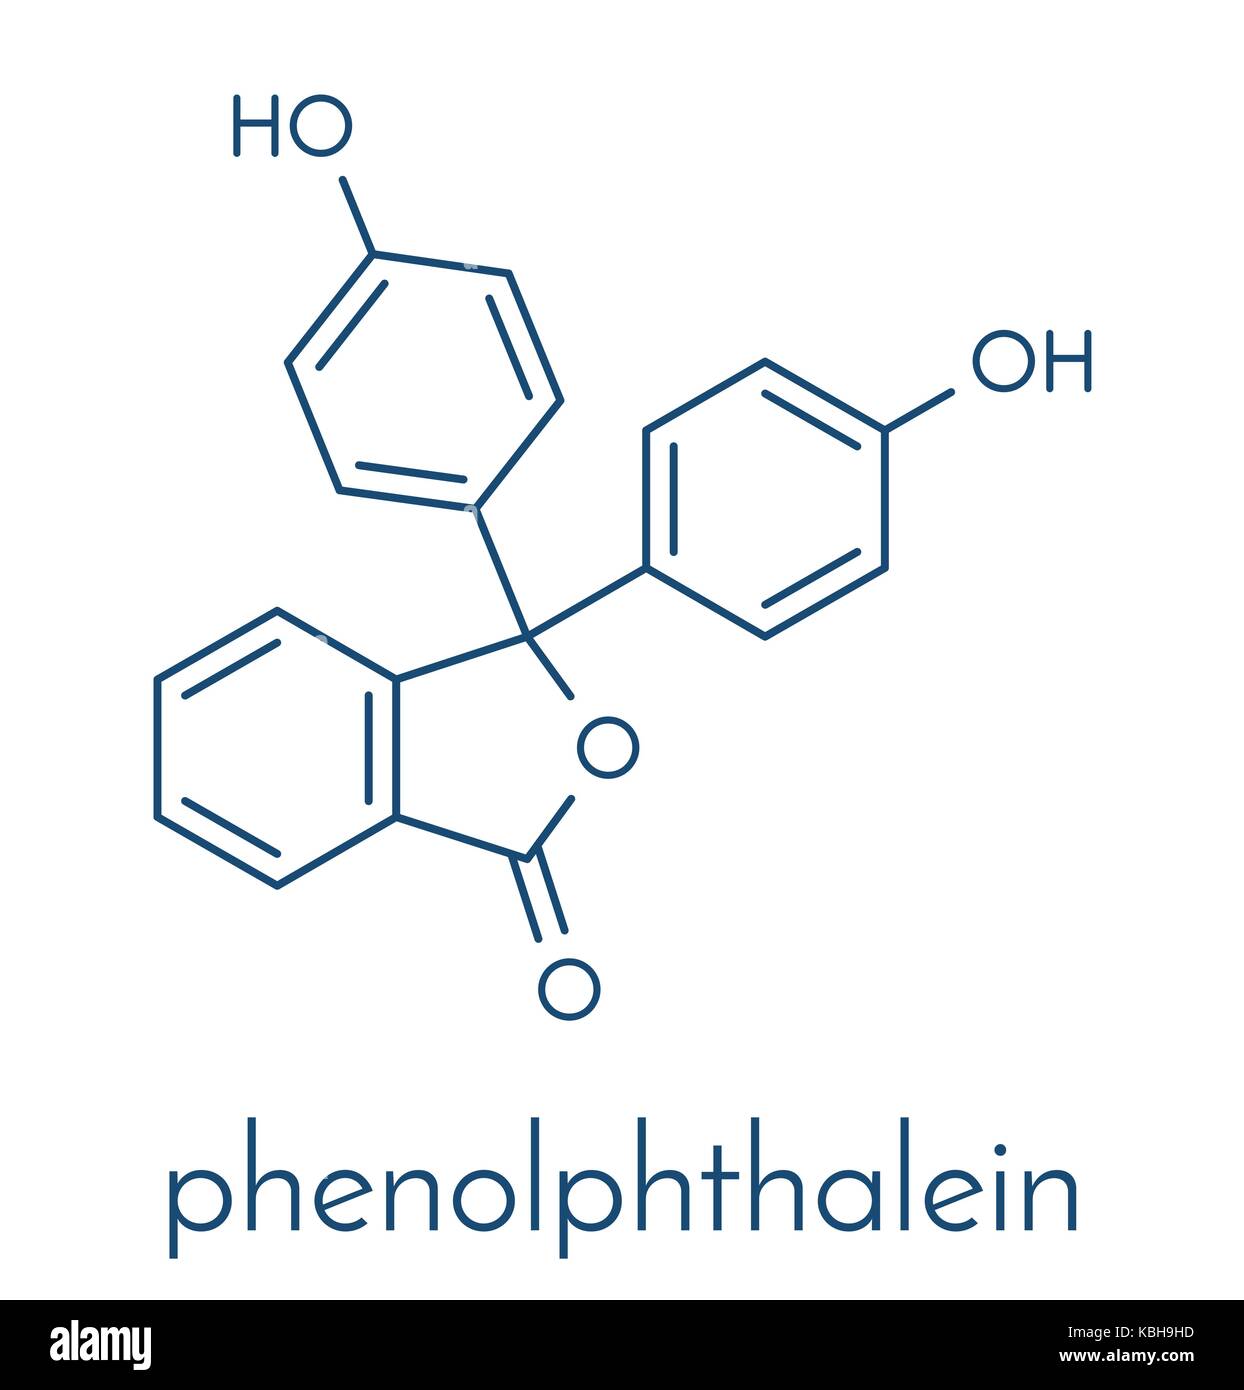 Phenolphthalein indicator